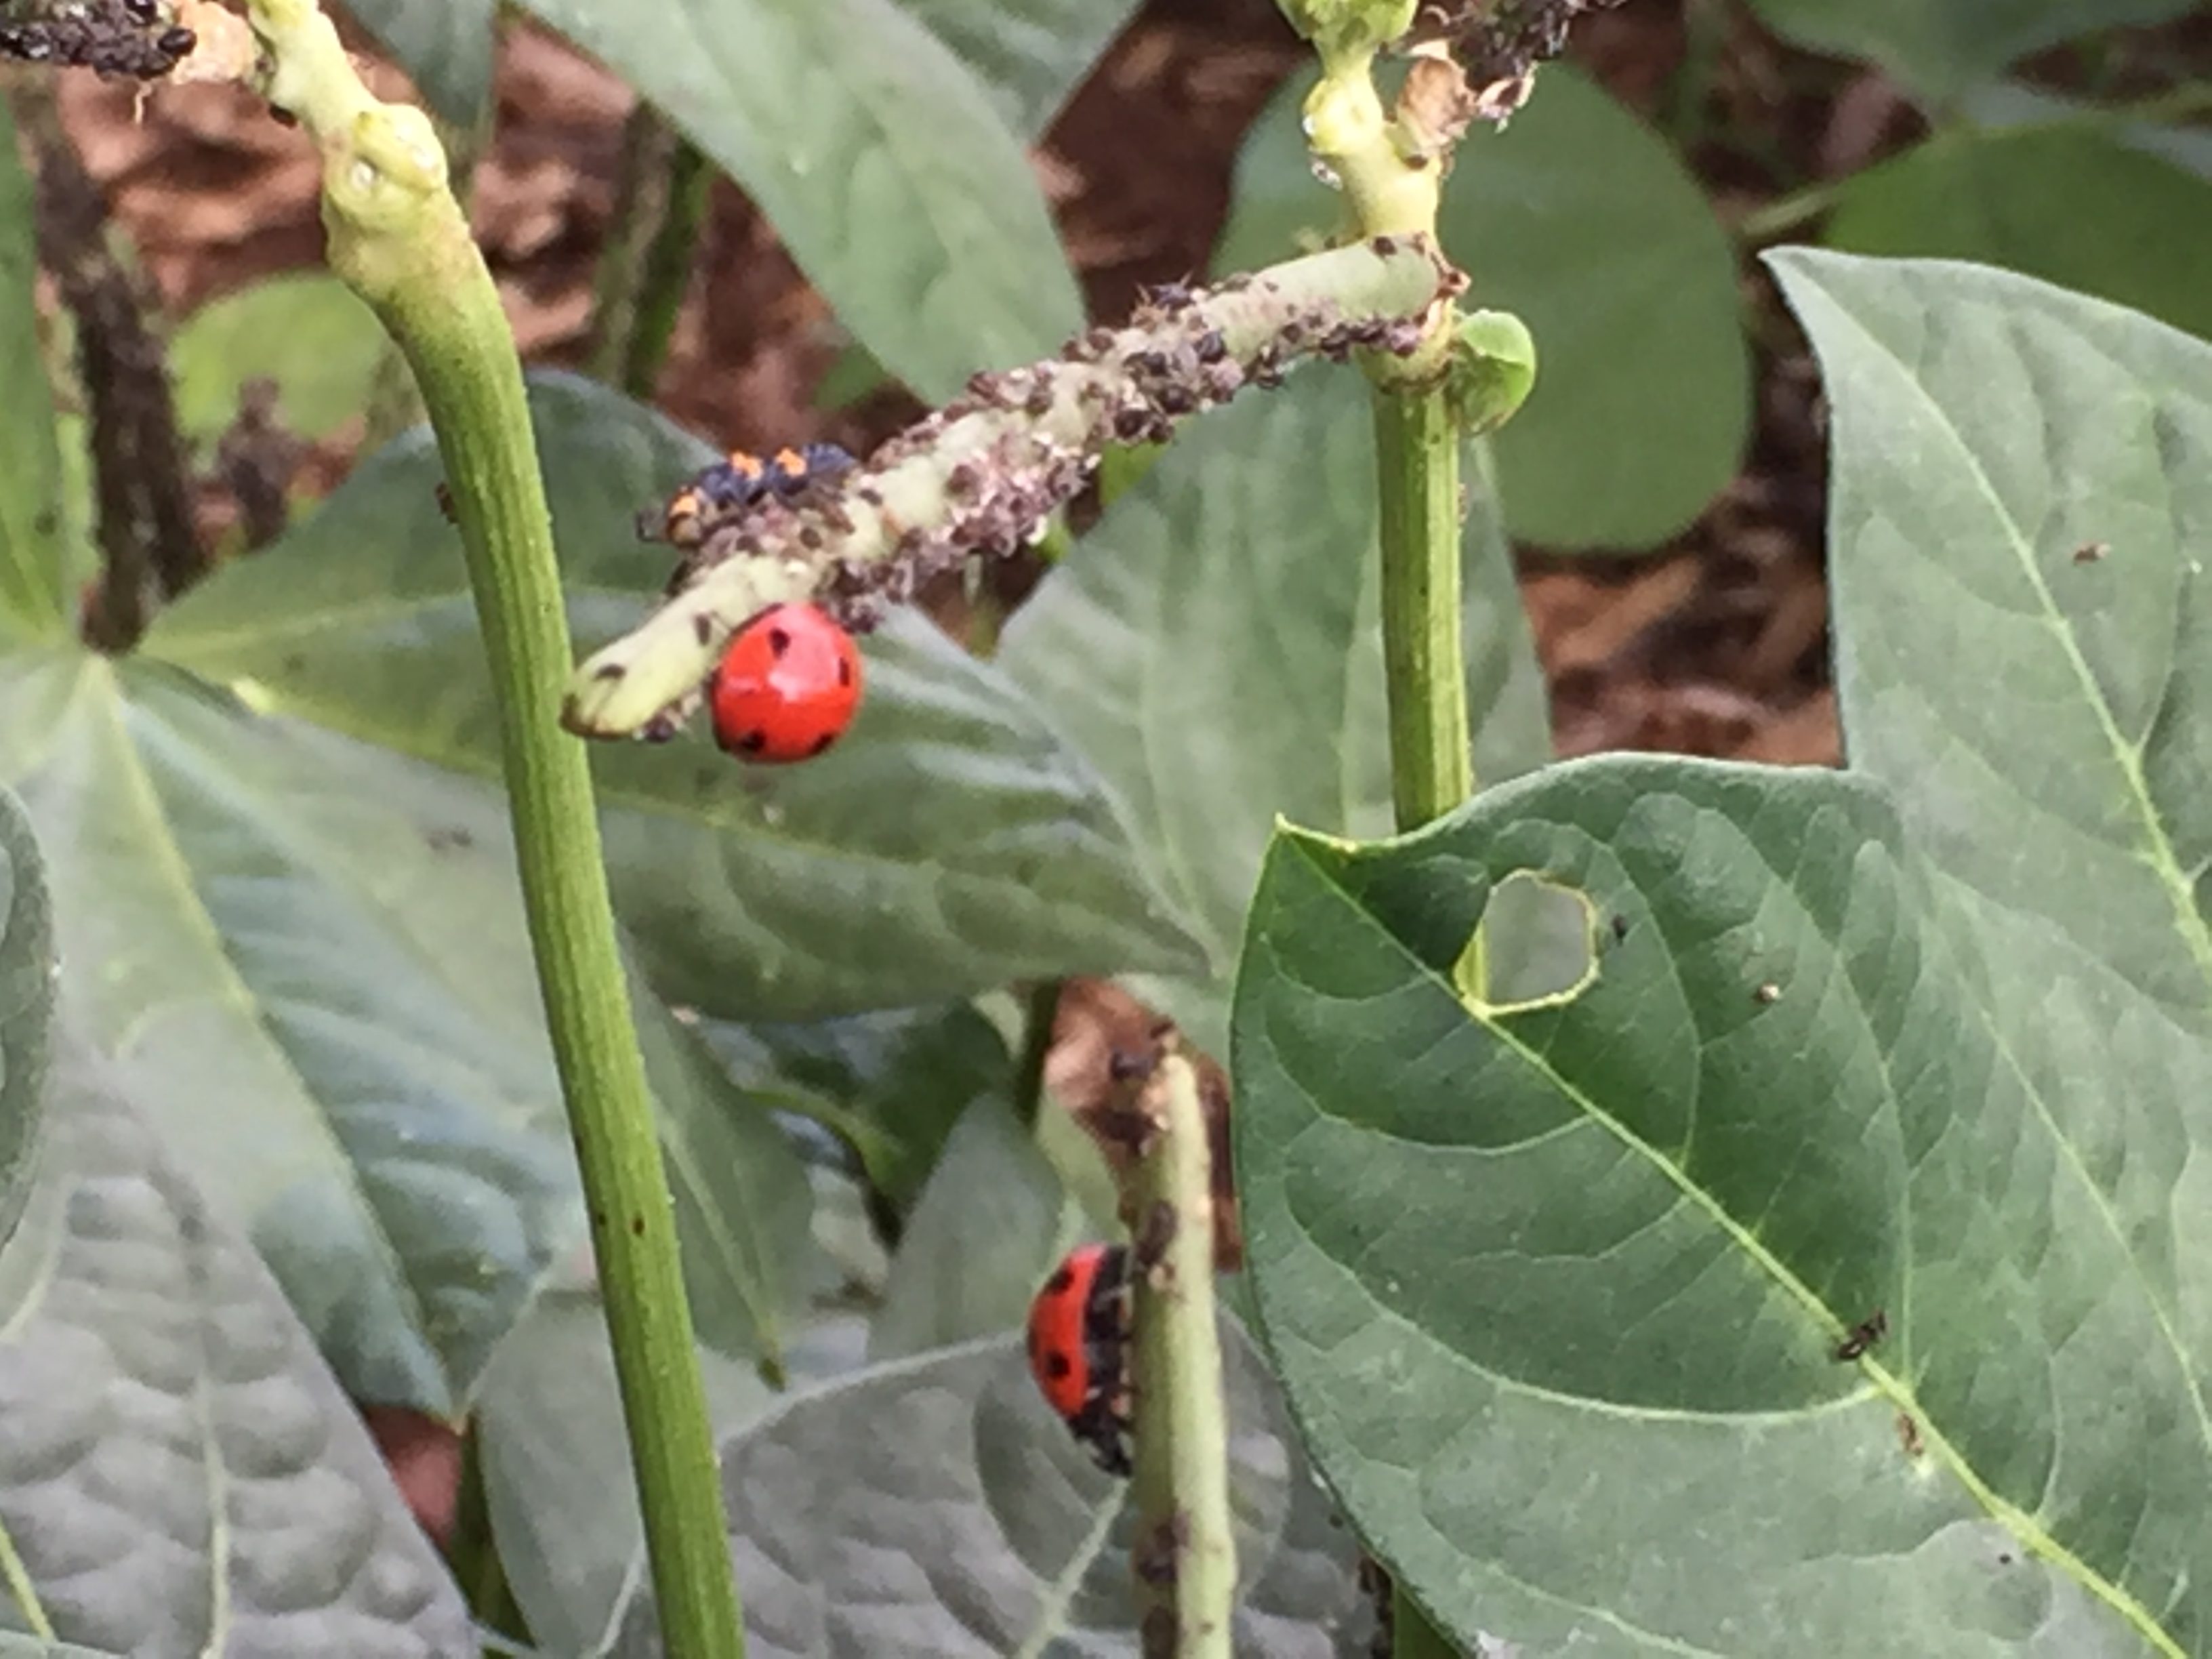 Ladybug Eating Aphids